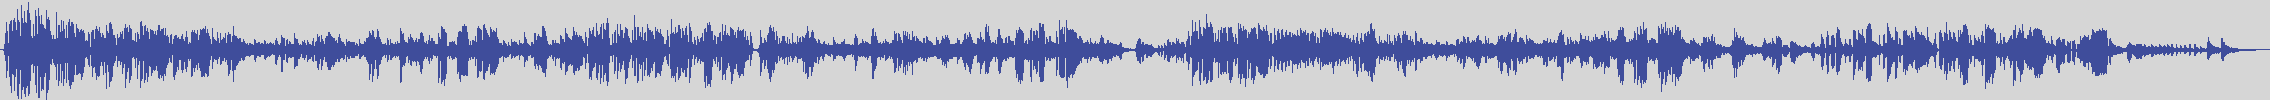 digiphonic_records [DPR007] Andrea Mingardi - Azident a Cal Dè [Original Mix] audio wave form